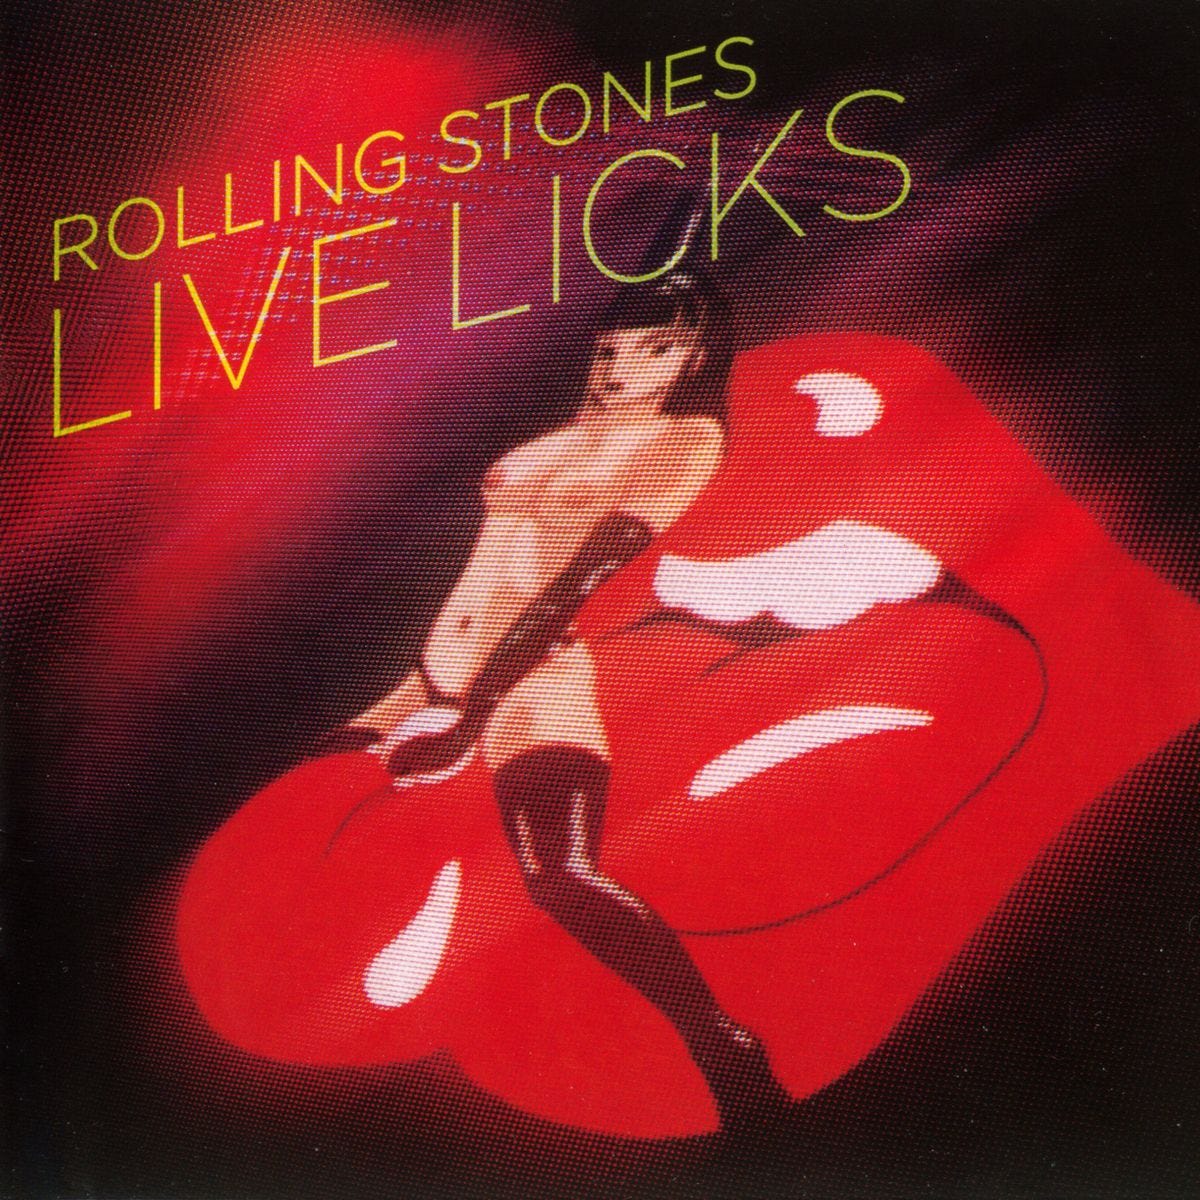 Live Licks | Rolling stones album covers, Rolling stones poster, Rolling stones